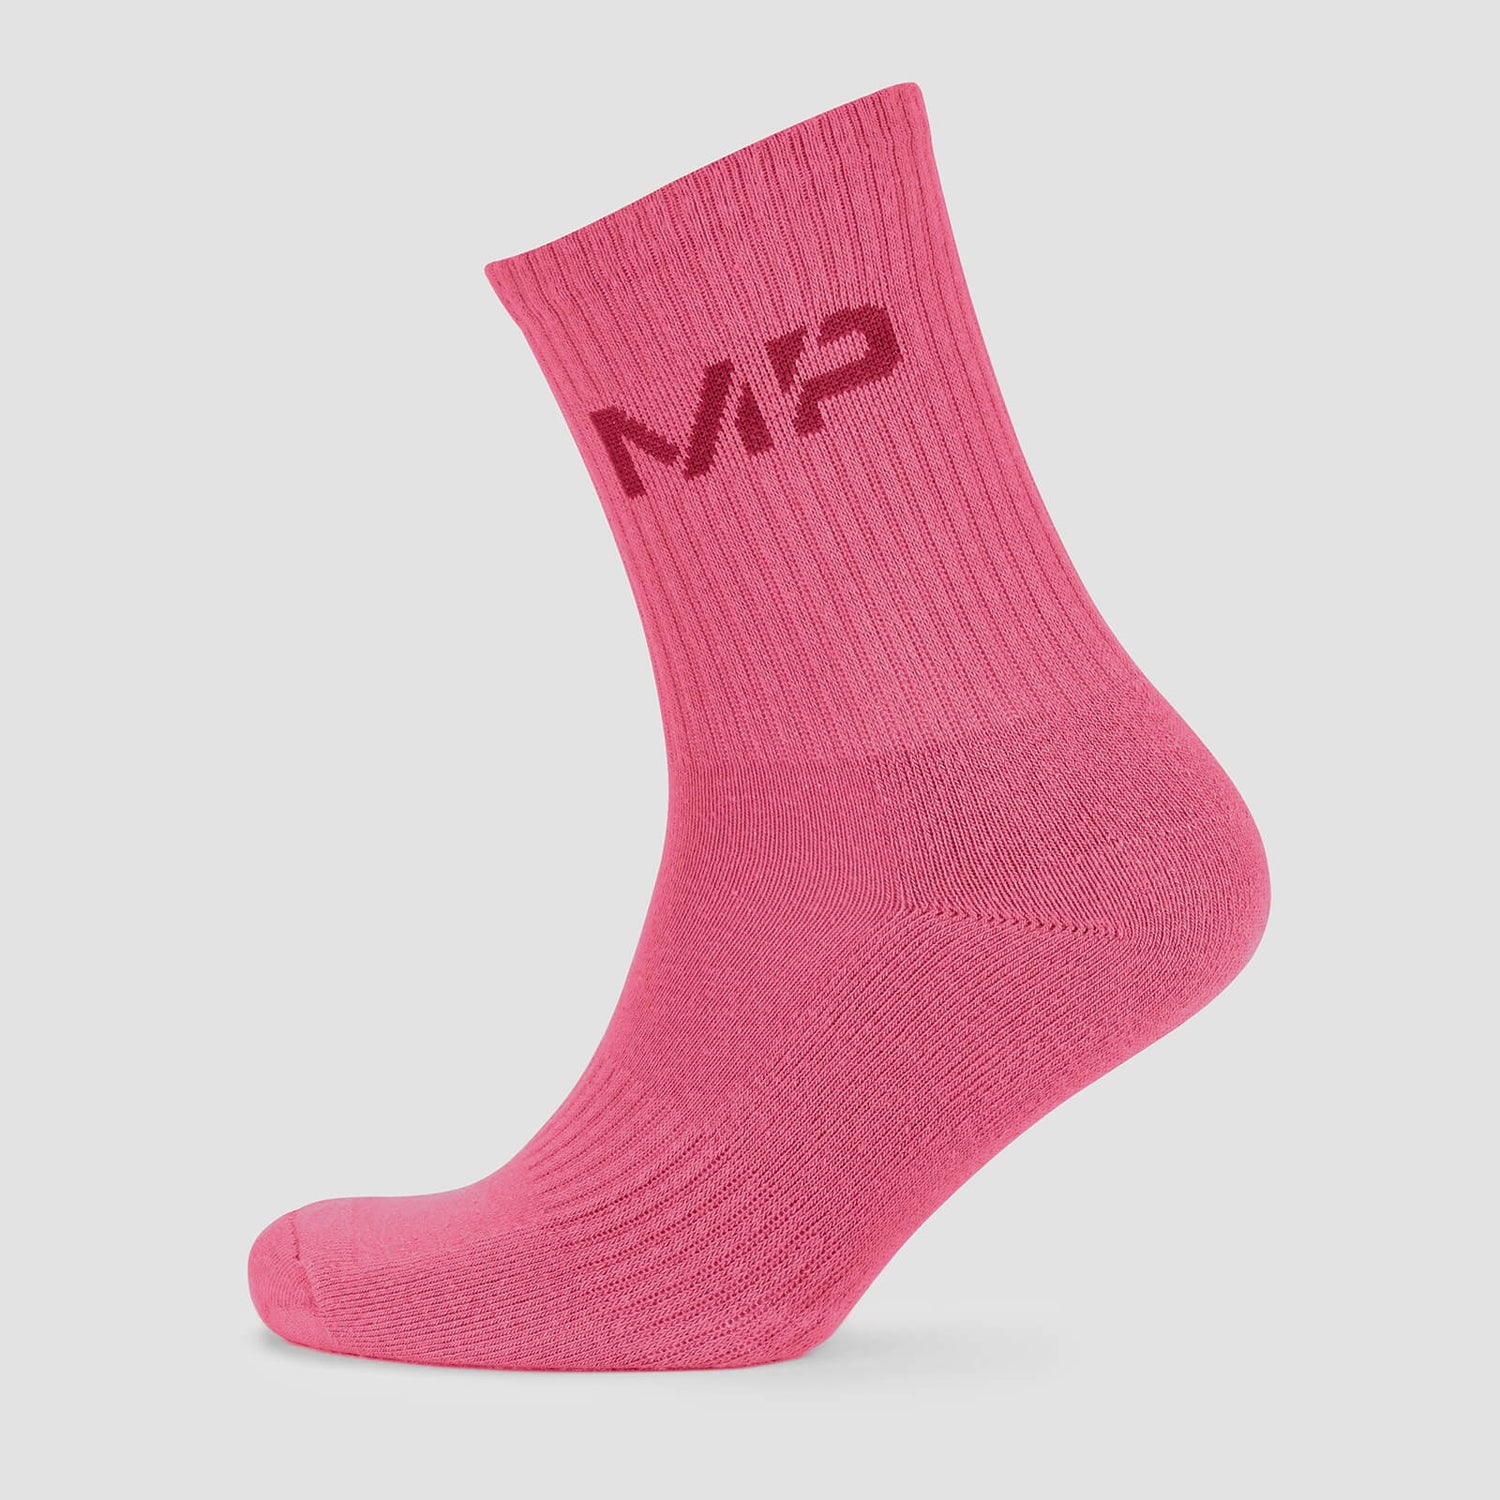 Vysoké ponožky MP Limited Edition Impact – ružové